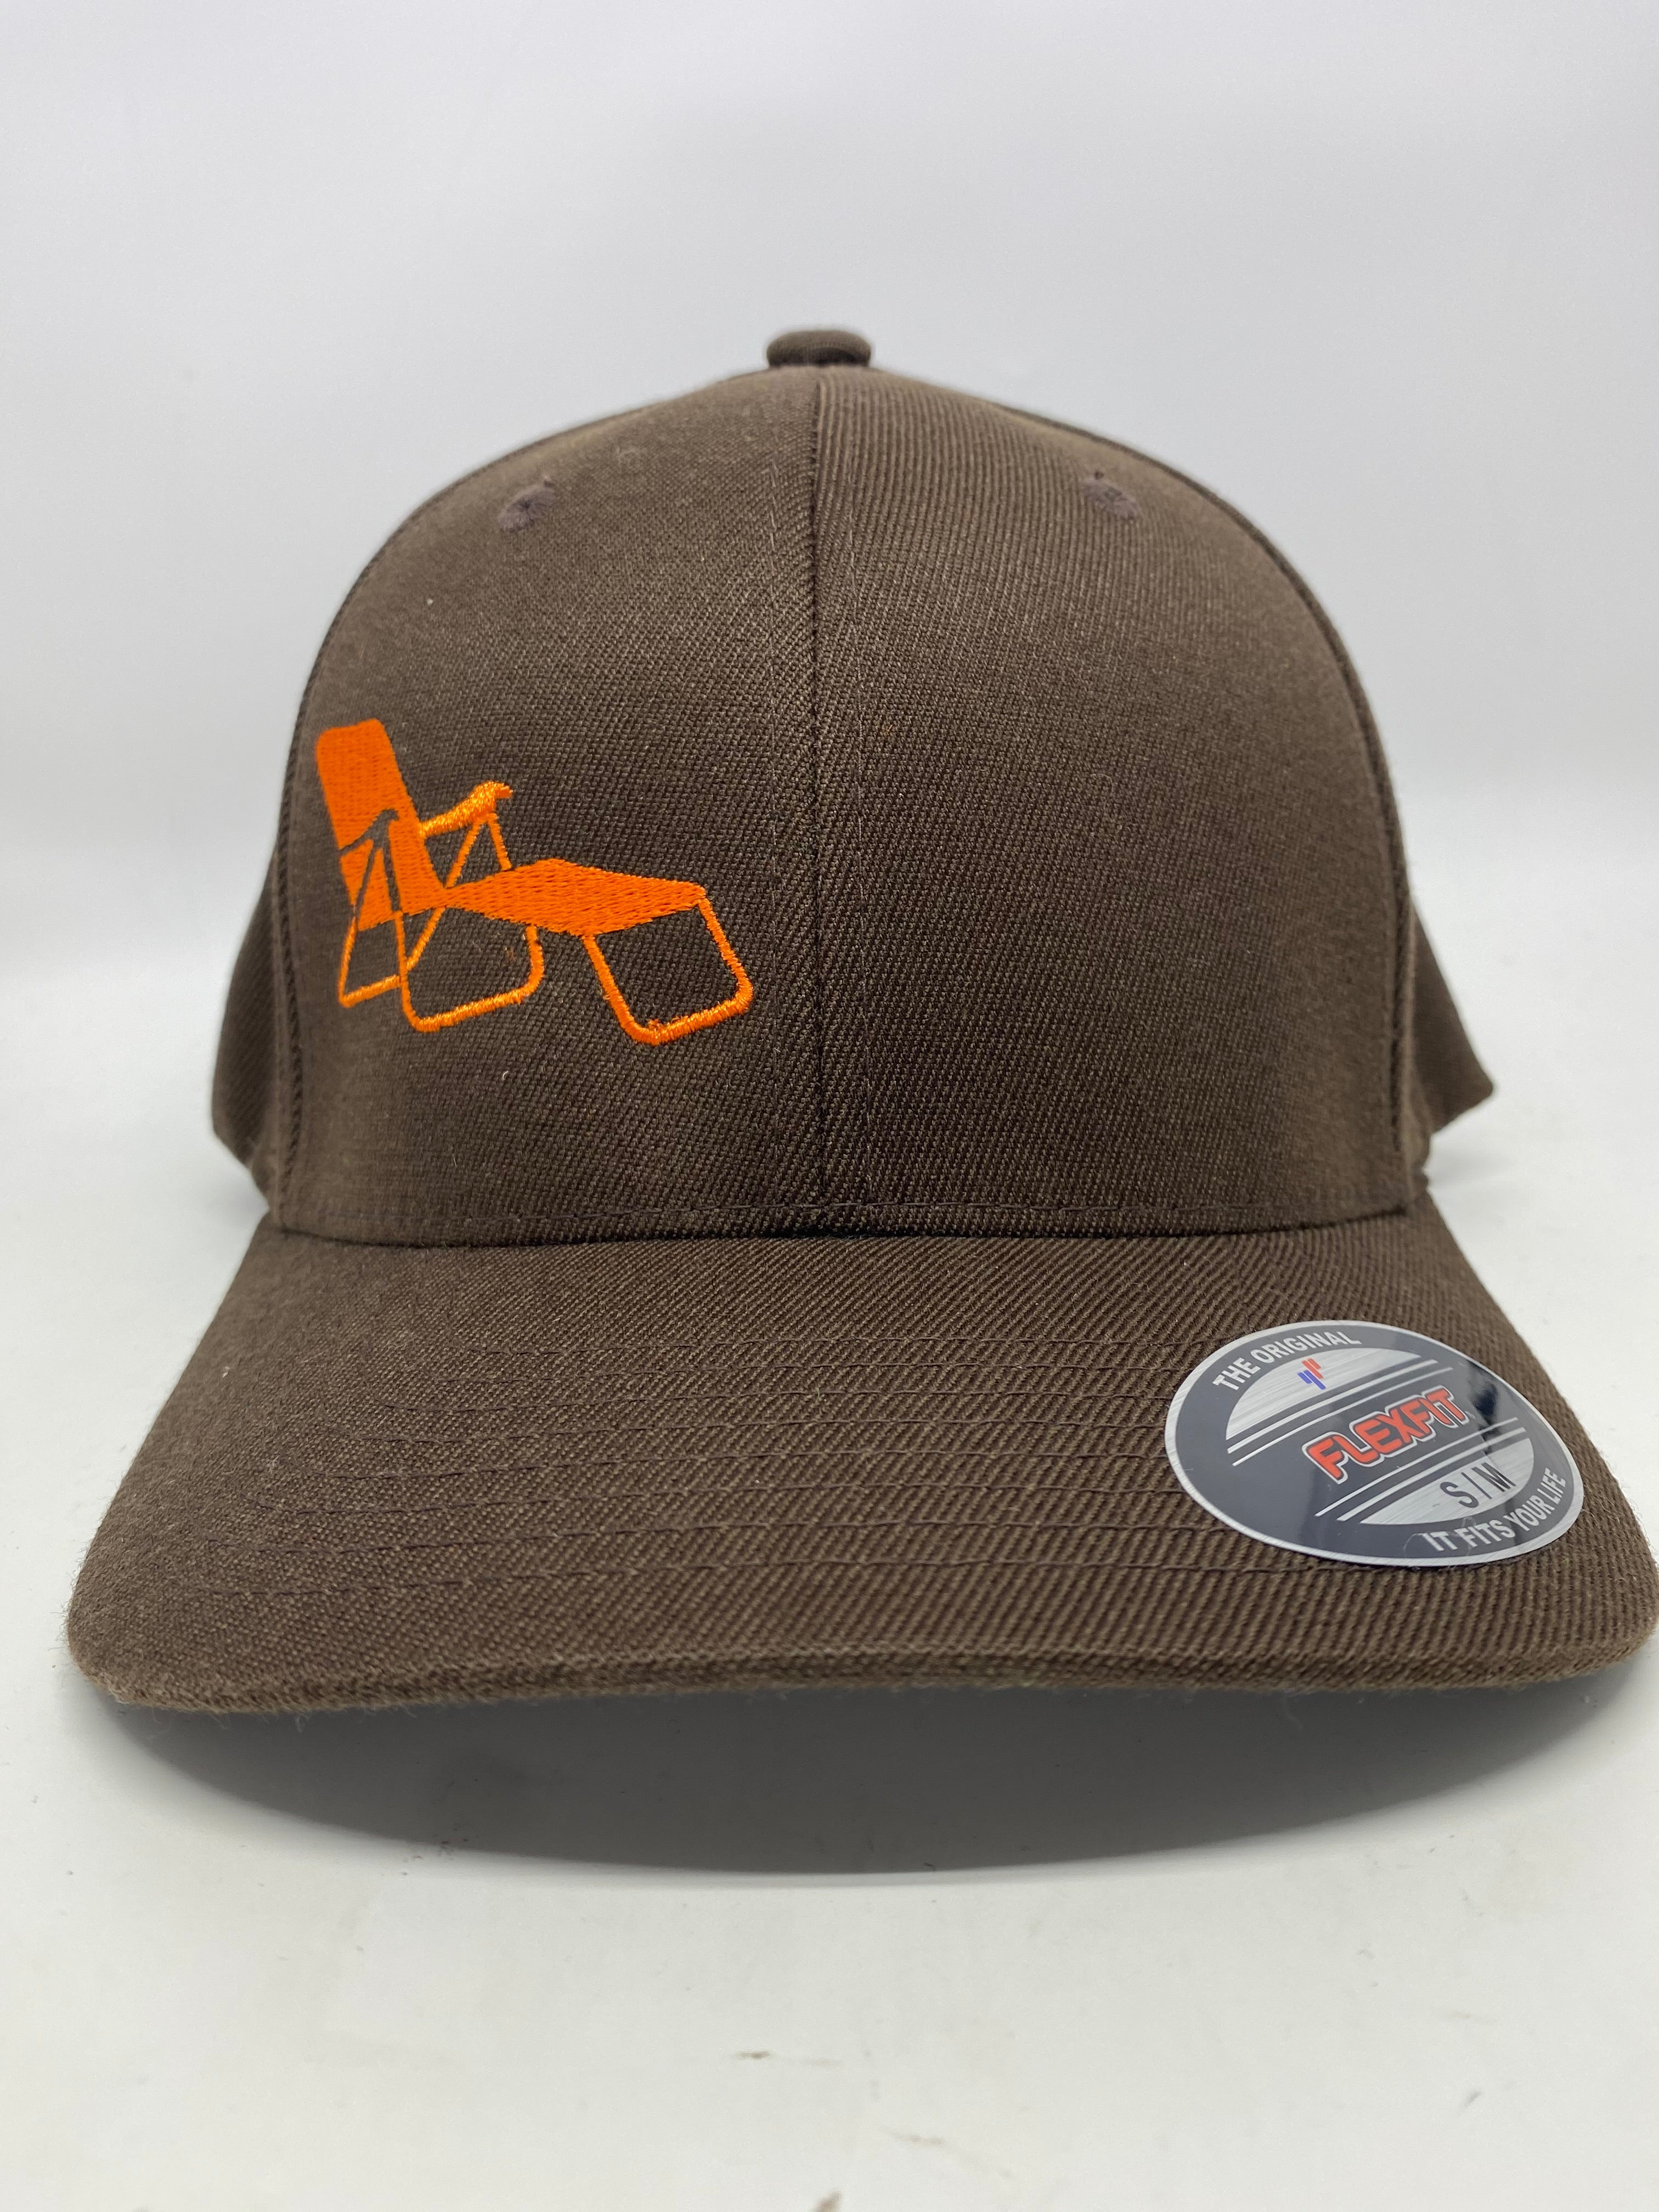 rideSFO LoungeChairLife Classic Hat Orange/Brown